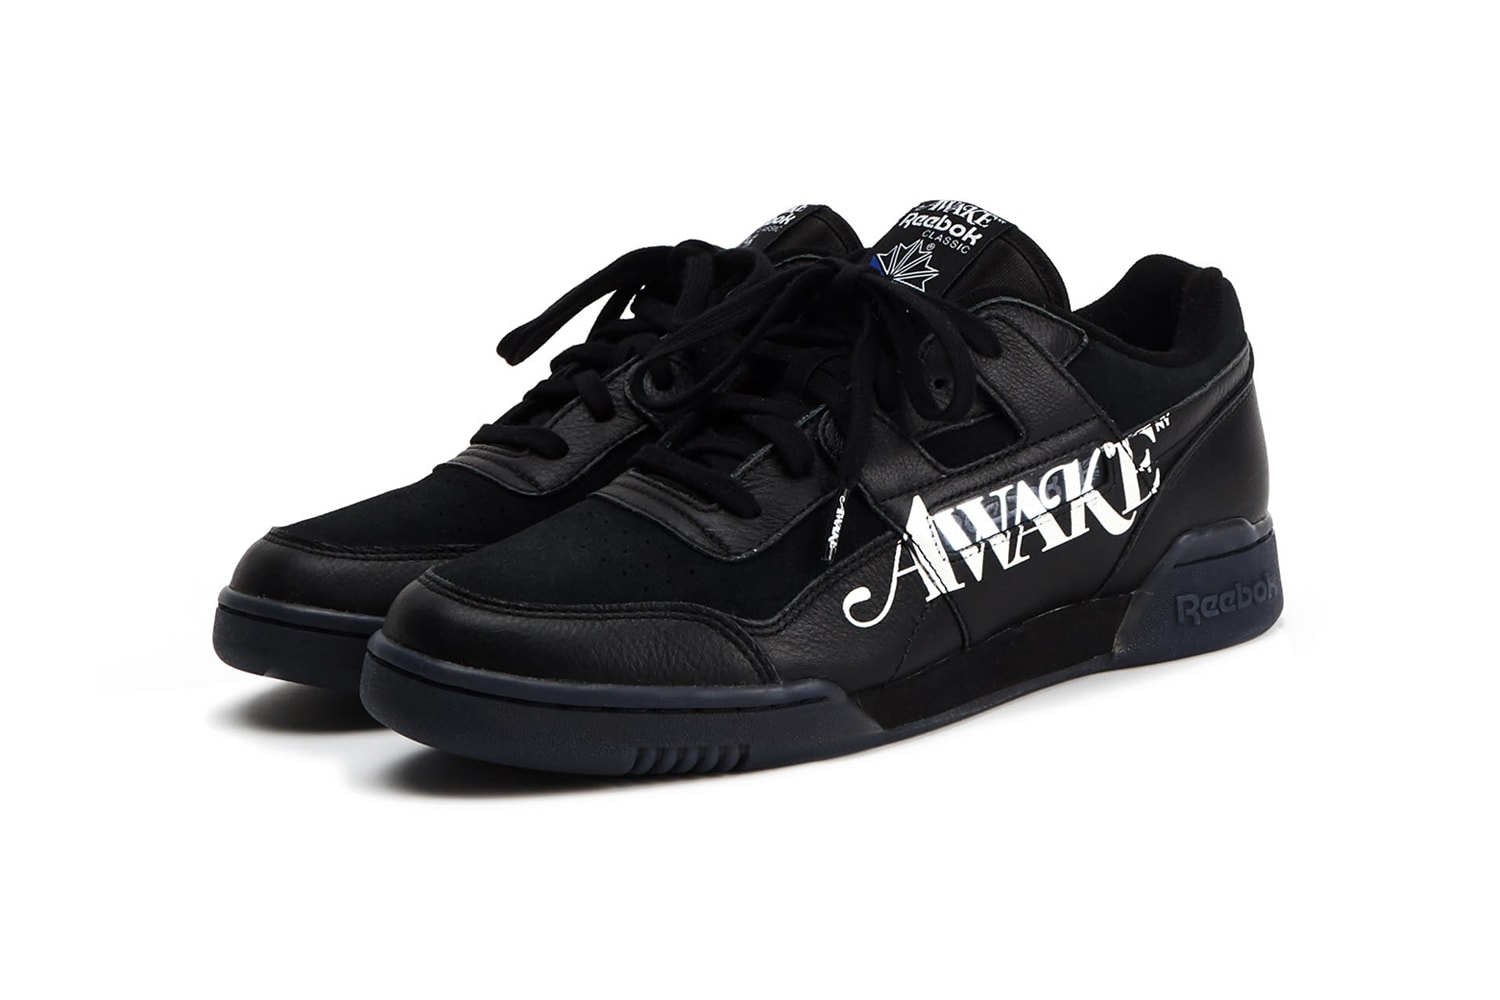 Awake NY x Reebok Classic 最新聯名鞋款、服飾系列正式發佈